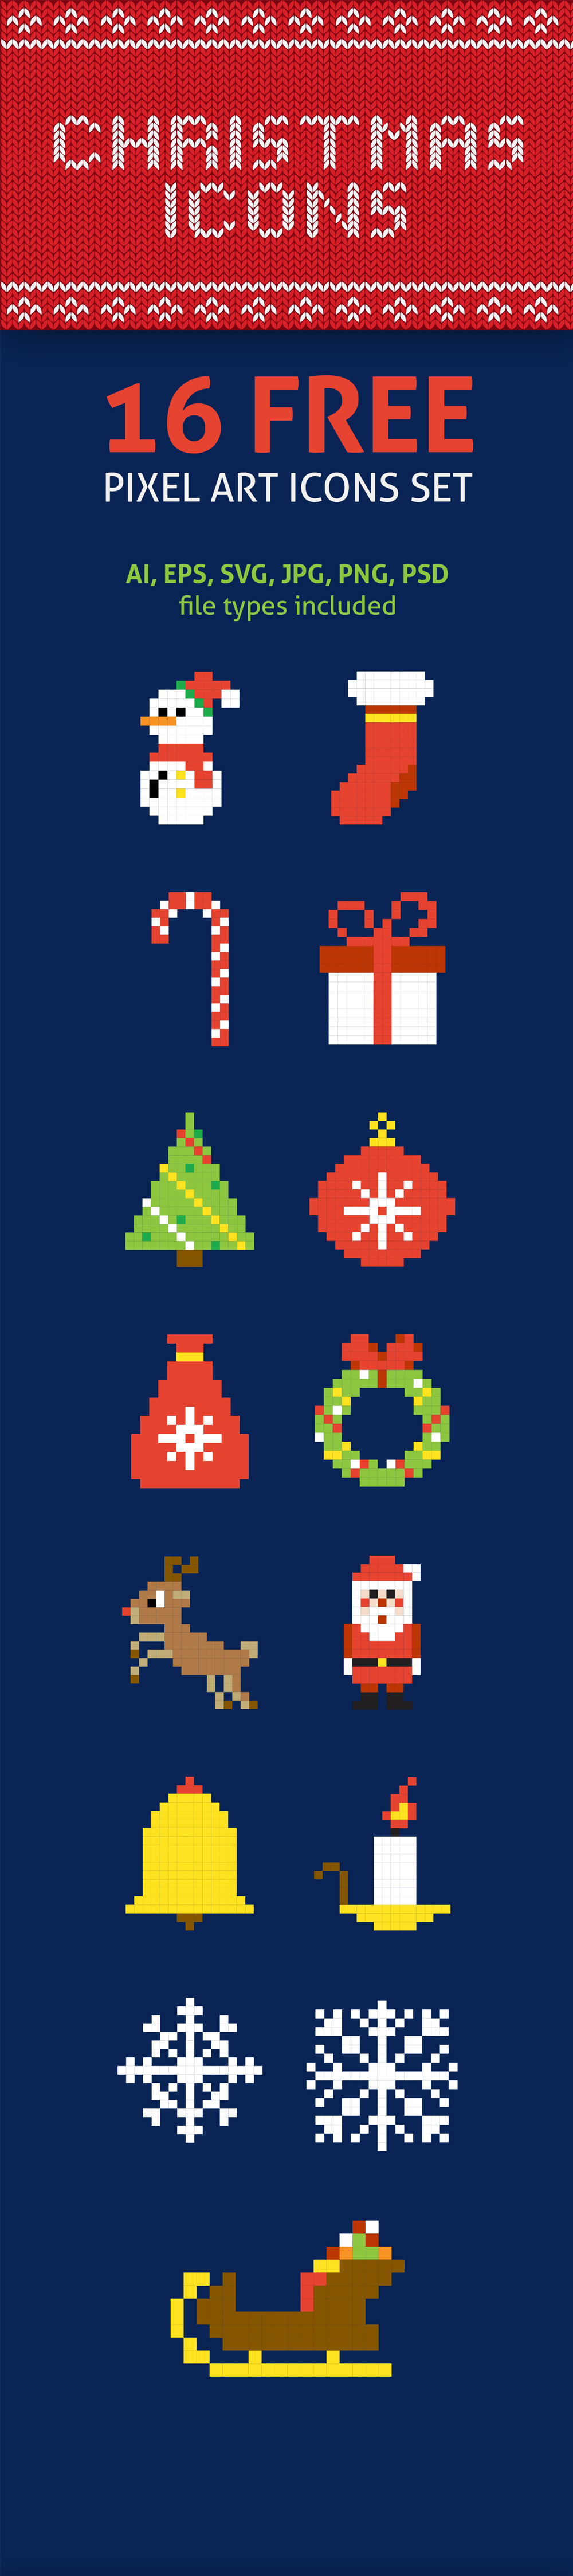 Free Pixel Christmas Icons